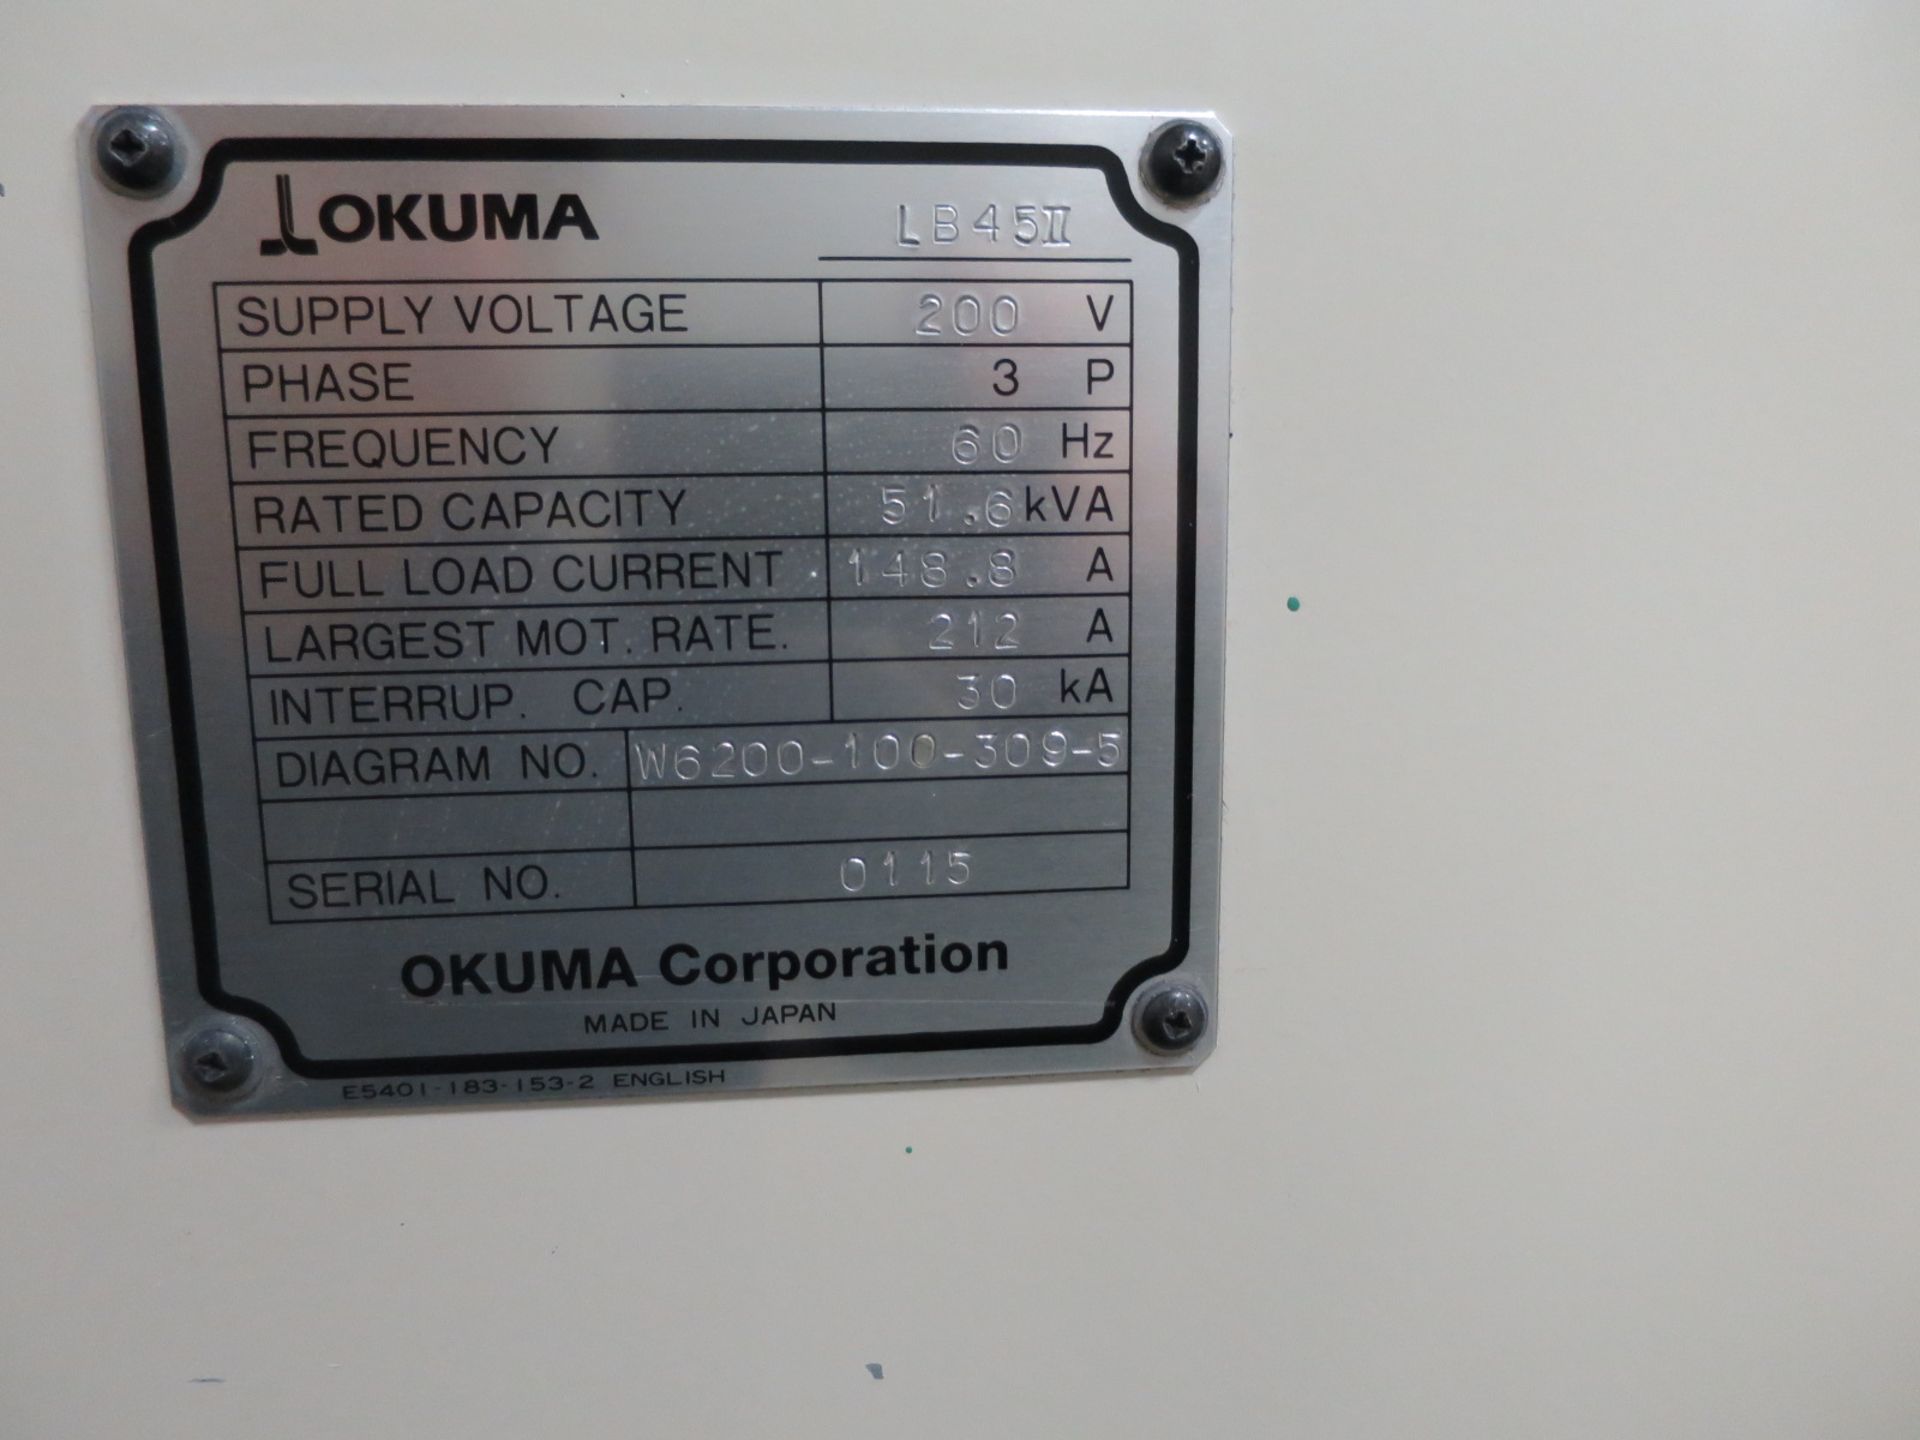 *** SOLD*** Okuma LB-45II CNC 2-Axis Turning Center Lathe, S/N 0115, New 2003 - Image 10 of 10